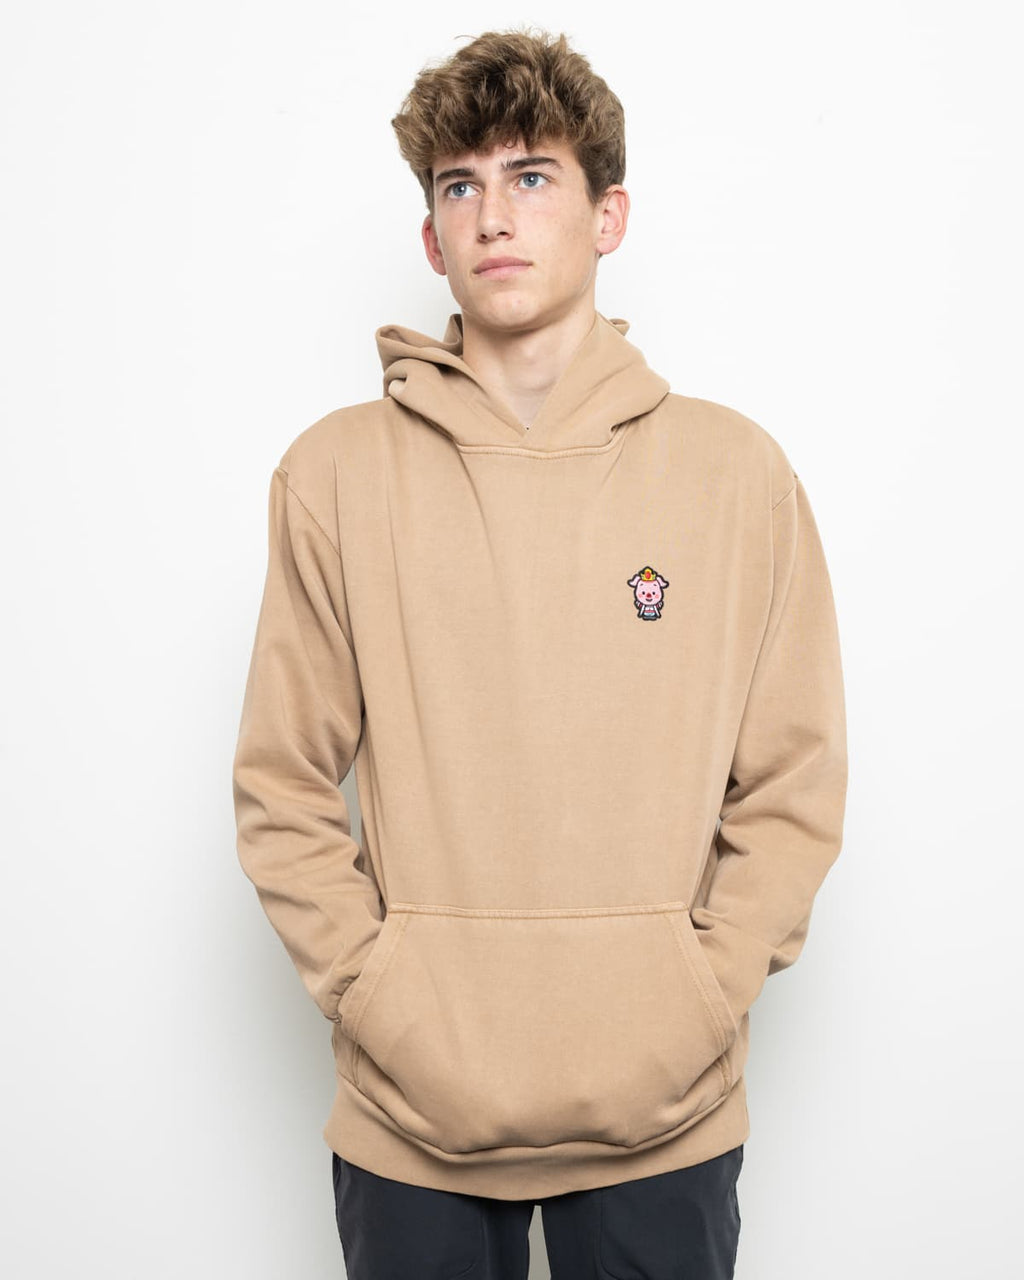 Technoblade printed hoodies Coat Sweatshirt Hooded Pullover Unisex